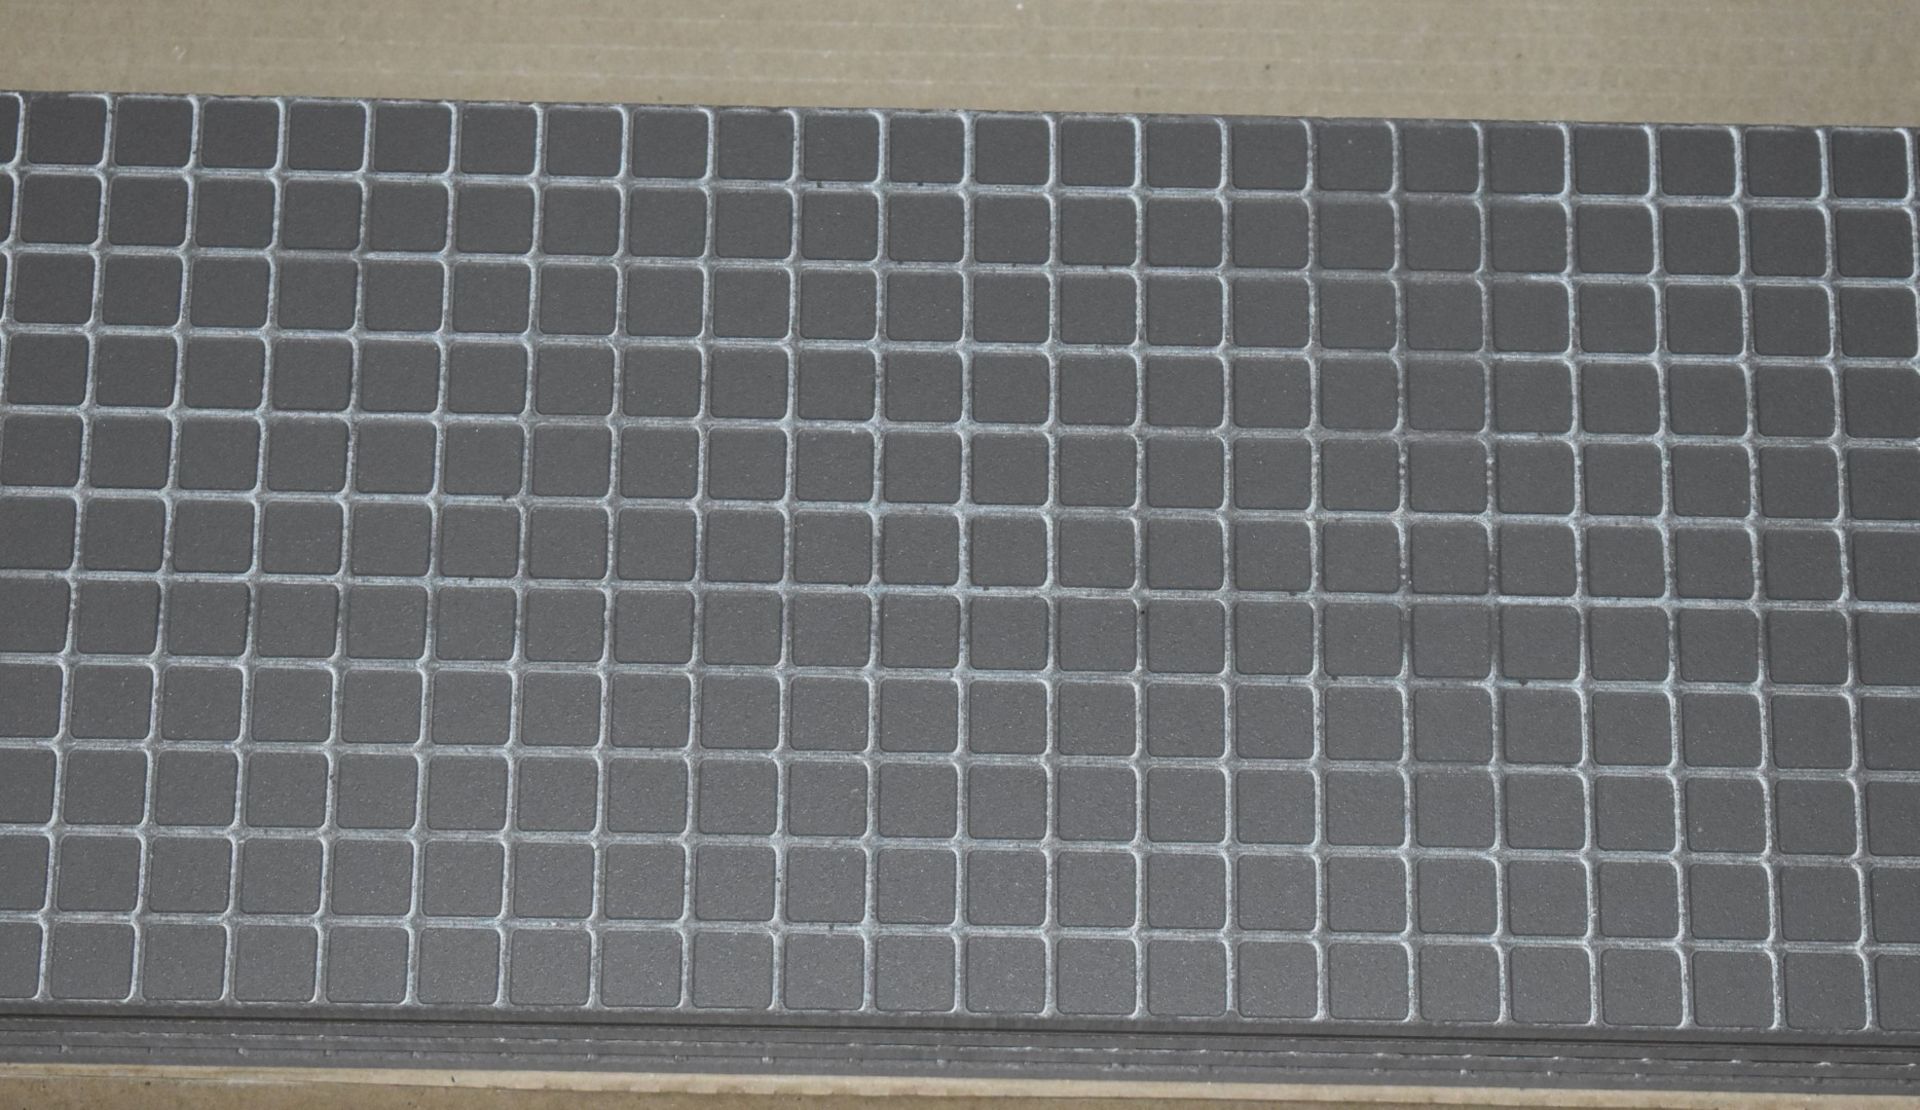 12 x Boxes of RAK Porcelain Floor or Wall Tiles - M Project Wood Design in Dark Grey - 19.5 x 120 cm - Image 6 of 8